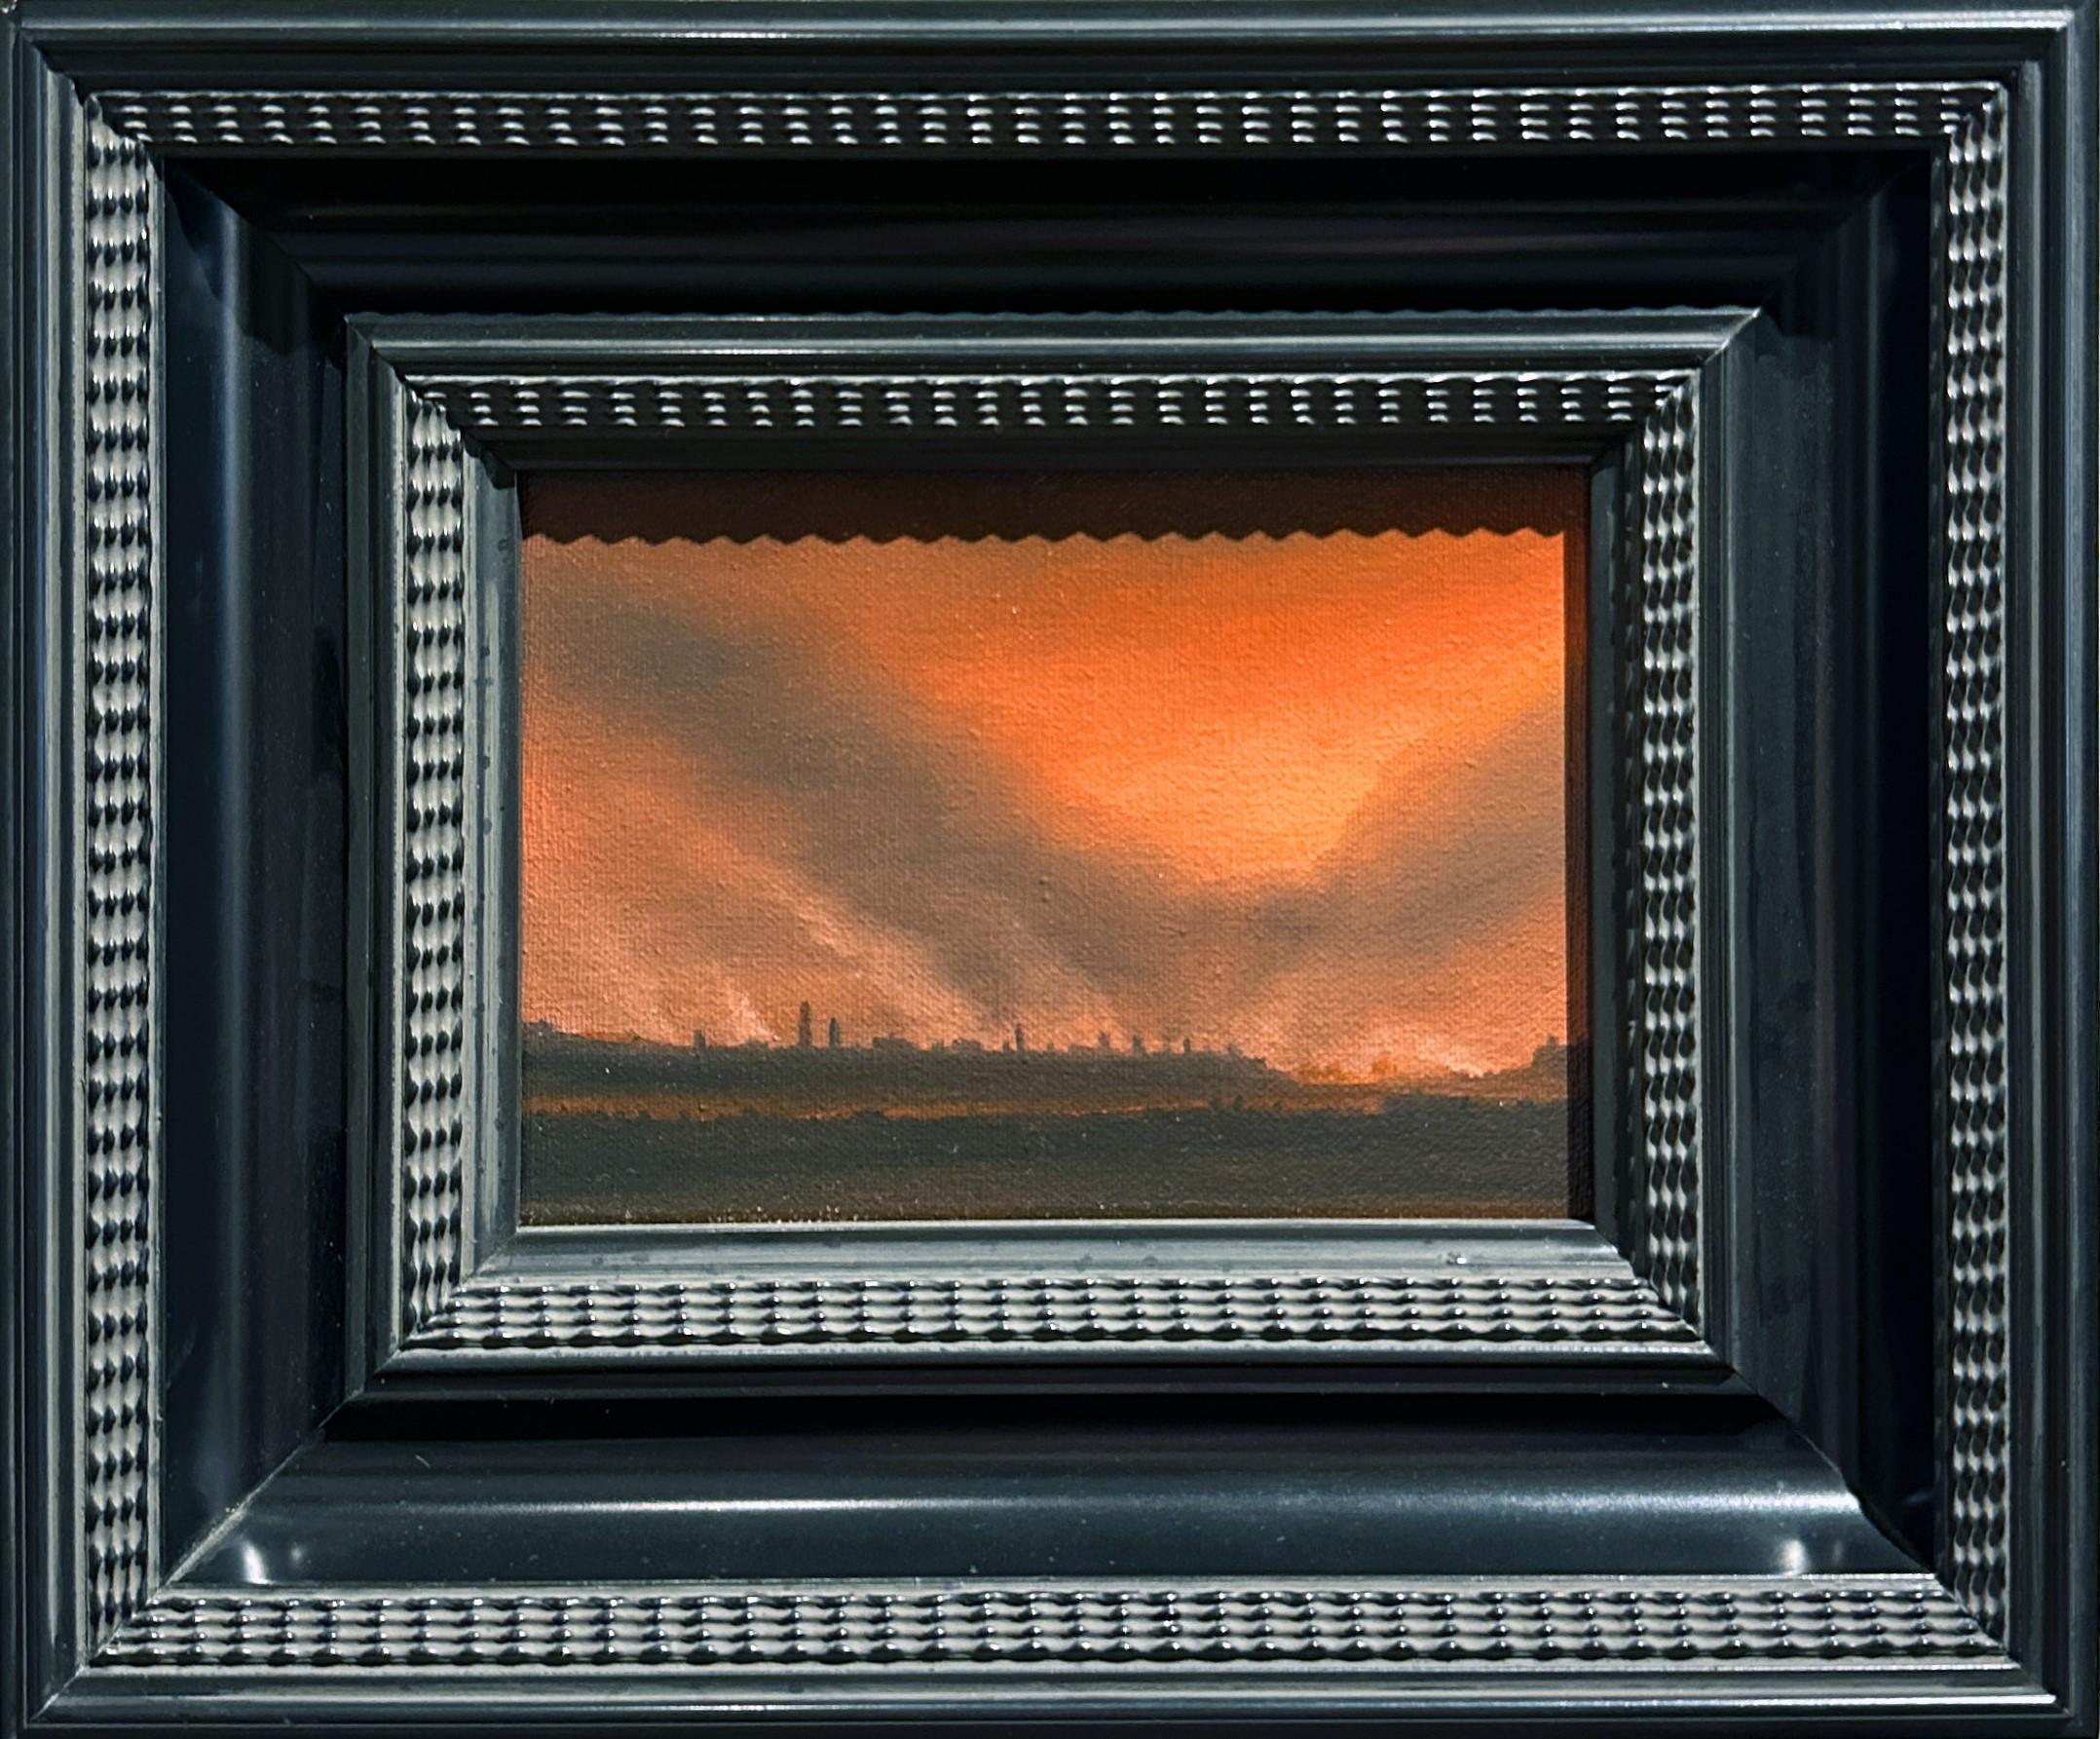 Ahzad Bogosian Landscape Painting - Refinery, Joliet, Illinois - Original Oil Painting w/ Dramatic Sunset, Landscape